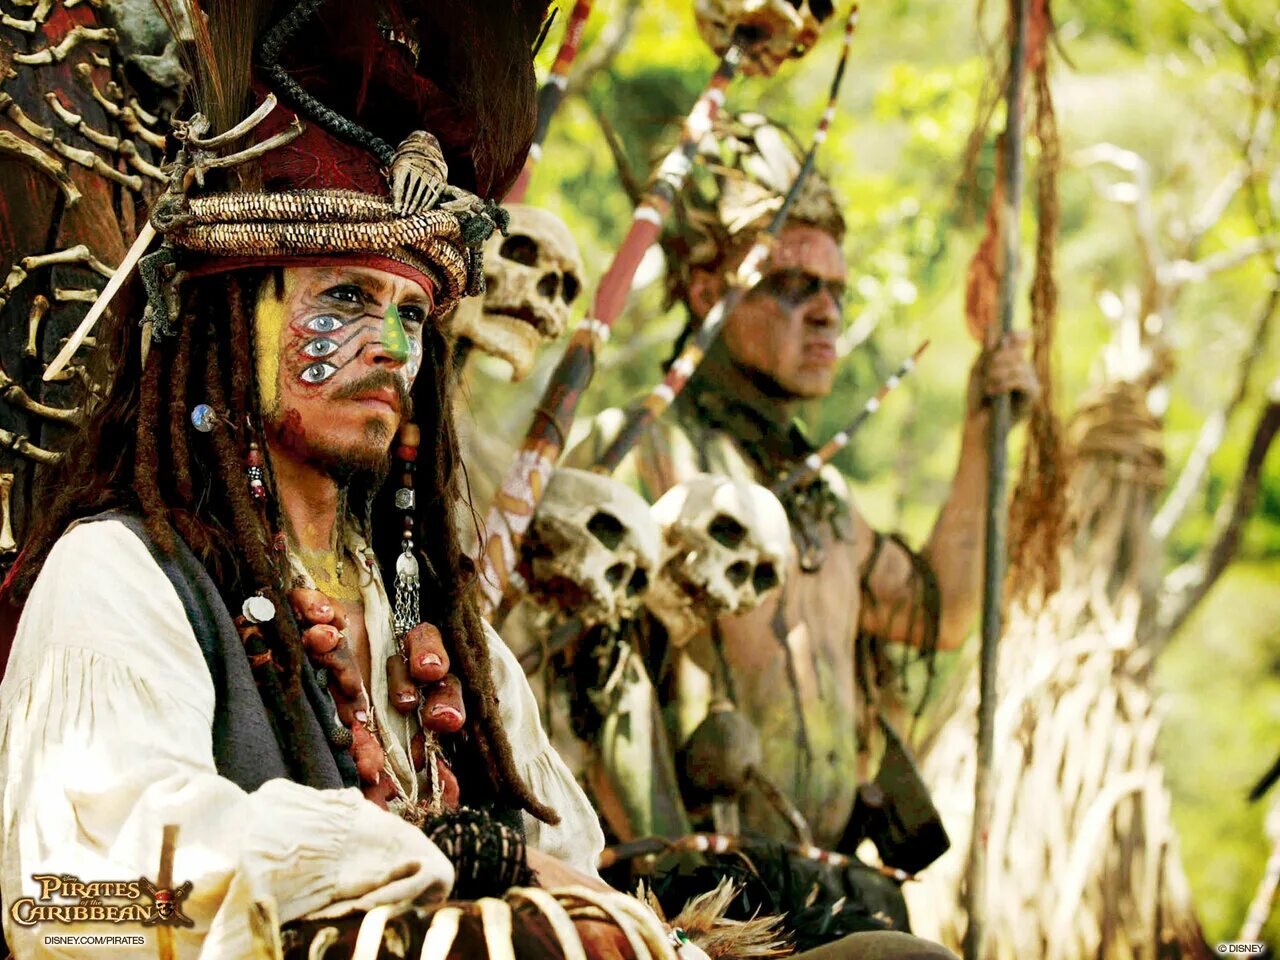 Пираты карибского 2. Джек Воробей сундук мертвеца. Джонни Депп пираты Карибского моря сундук мертвеца. Пираты Карибского моря 2 Джек Воробей. Капитан Джек сундук мертвеца.